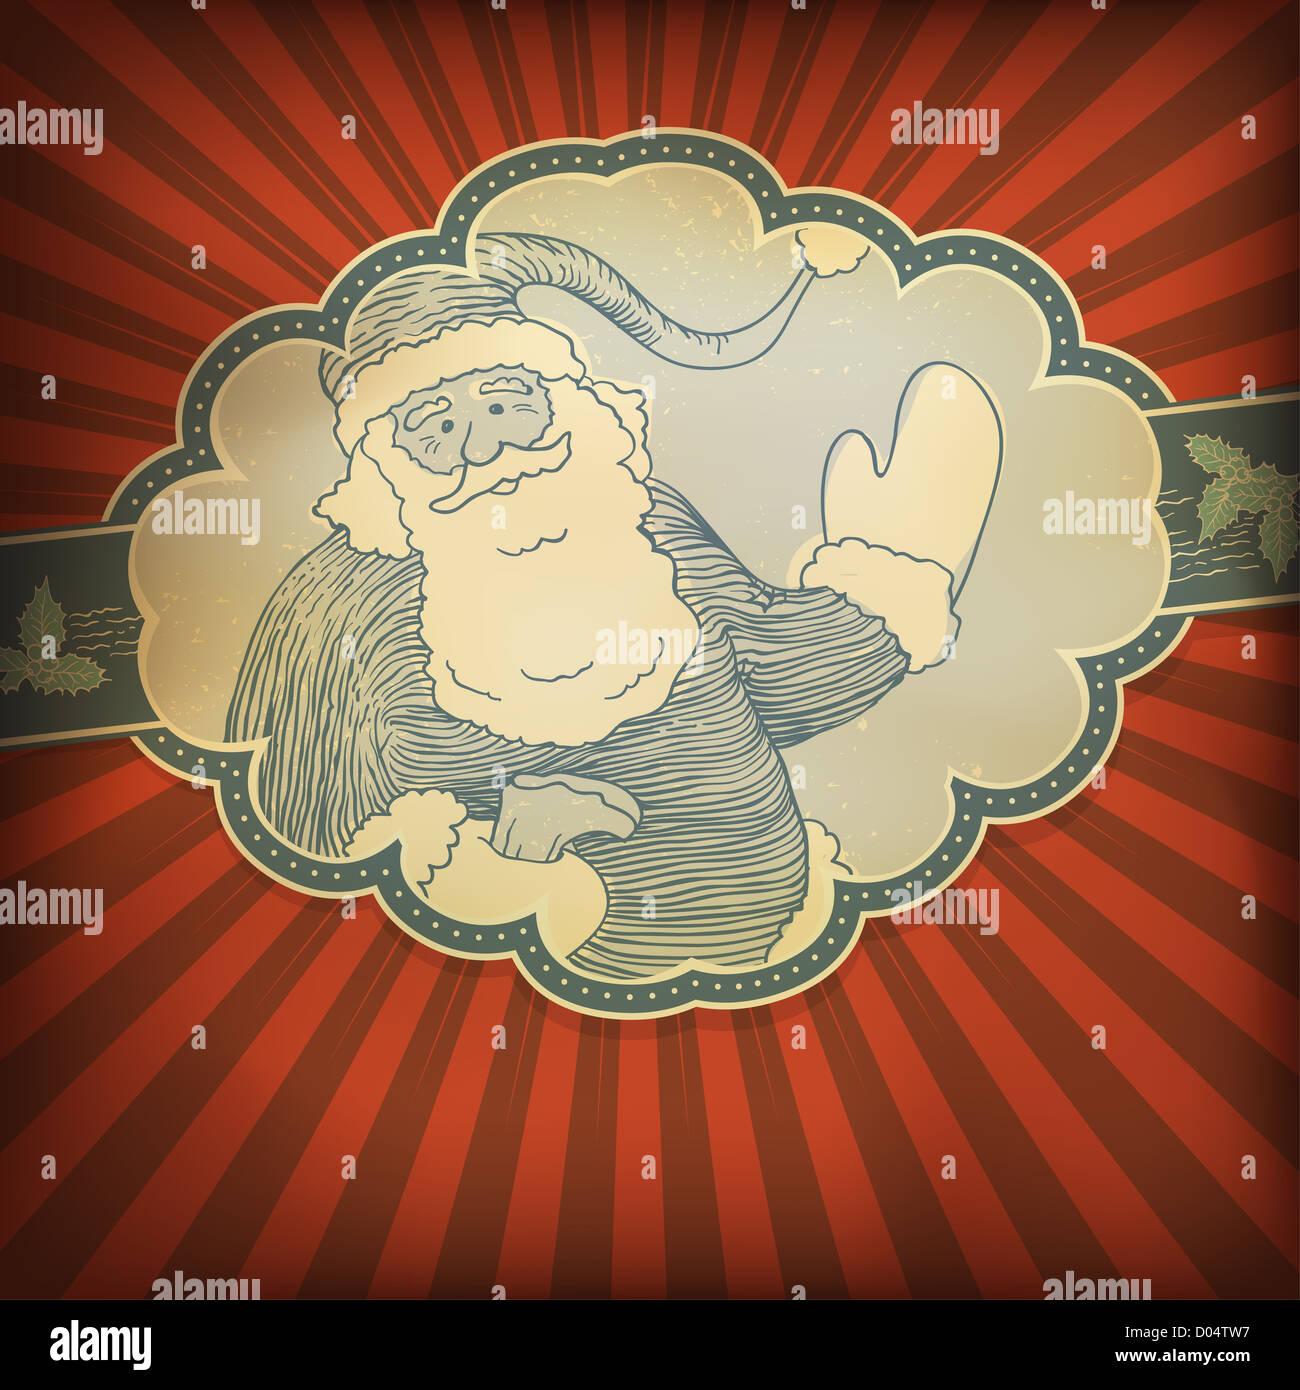 Santa Claus retro styled illustration Stock Photo